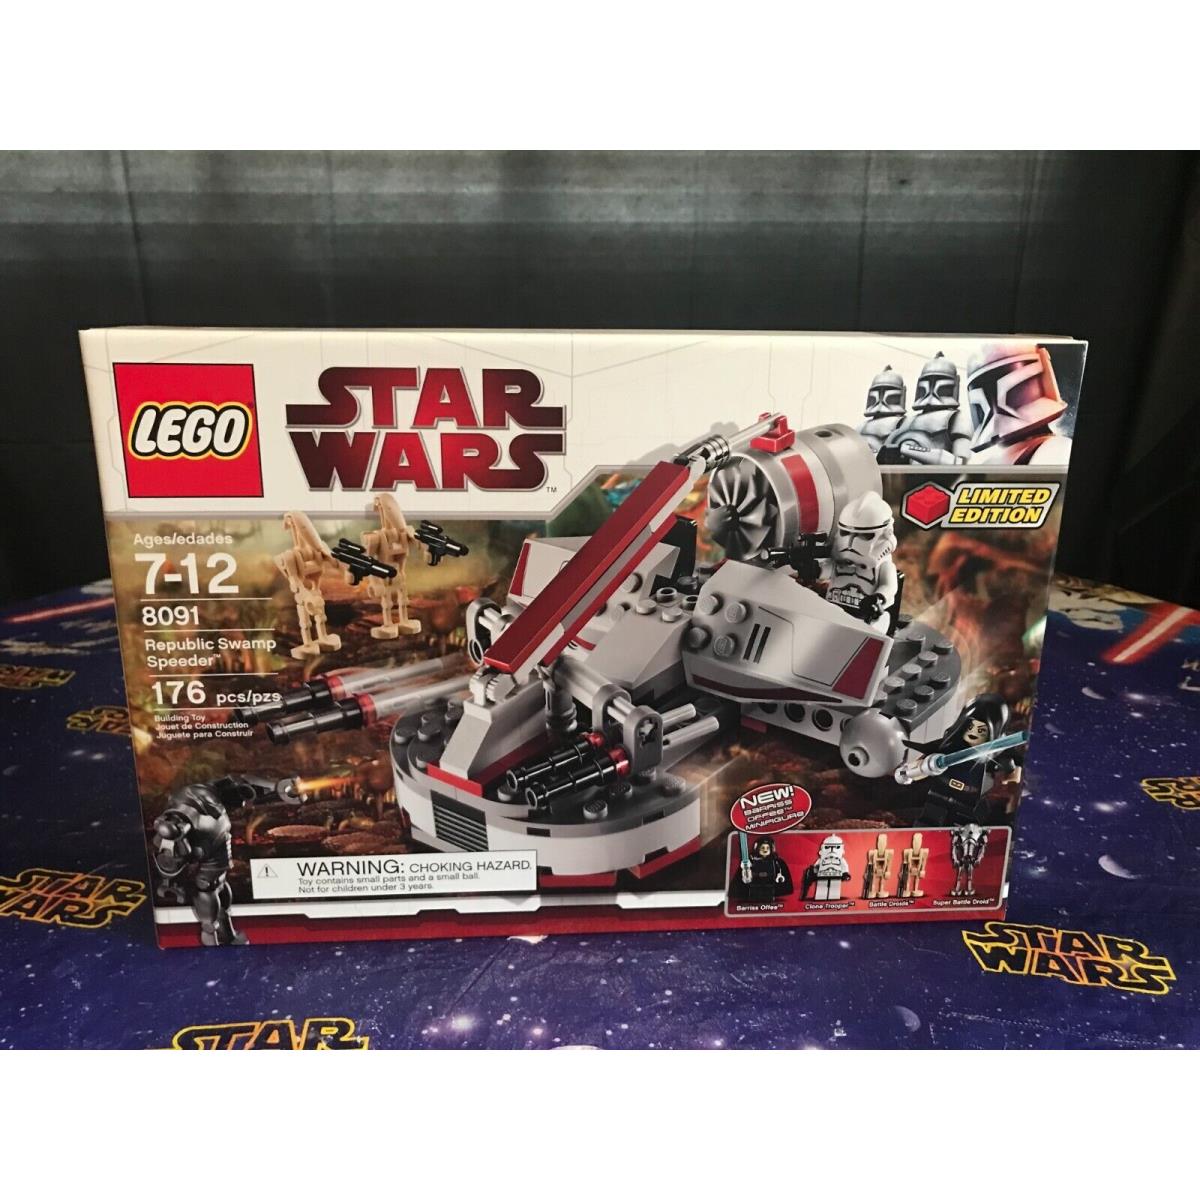 Lego Star Wars: Republic Swamp Speeder 8091 Limited Edition 176 Pcs